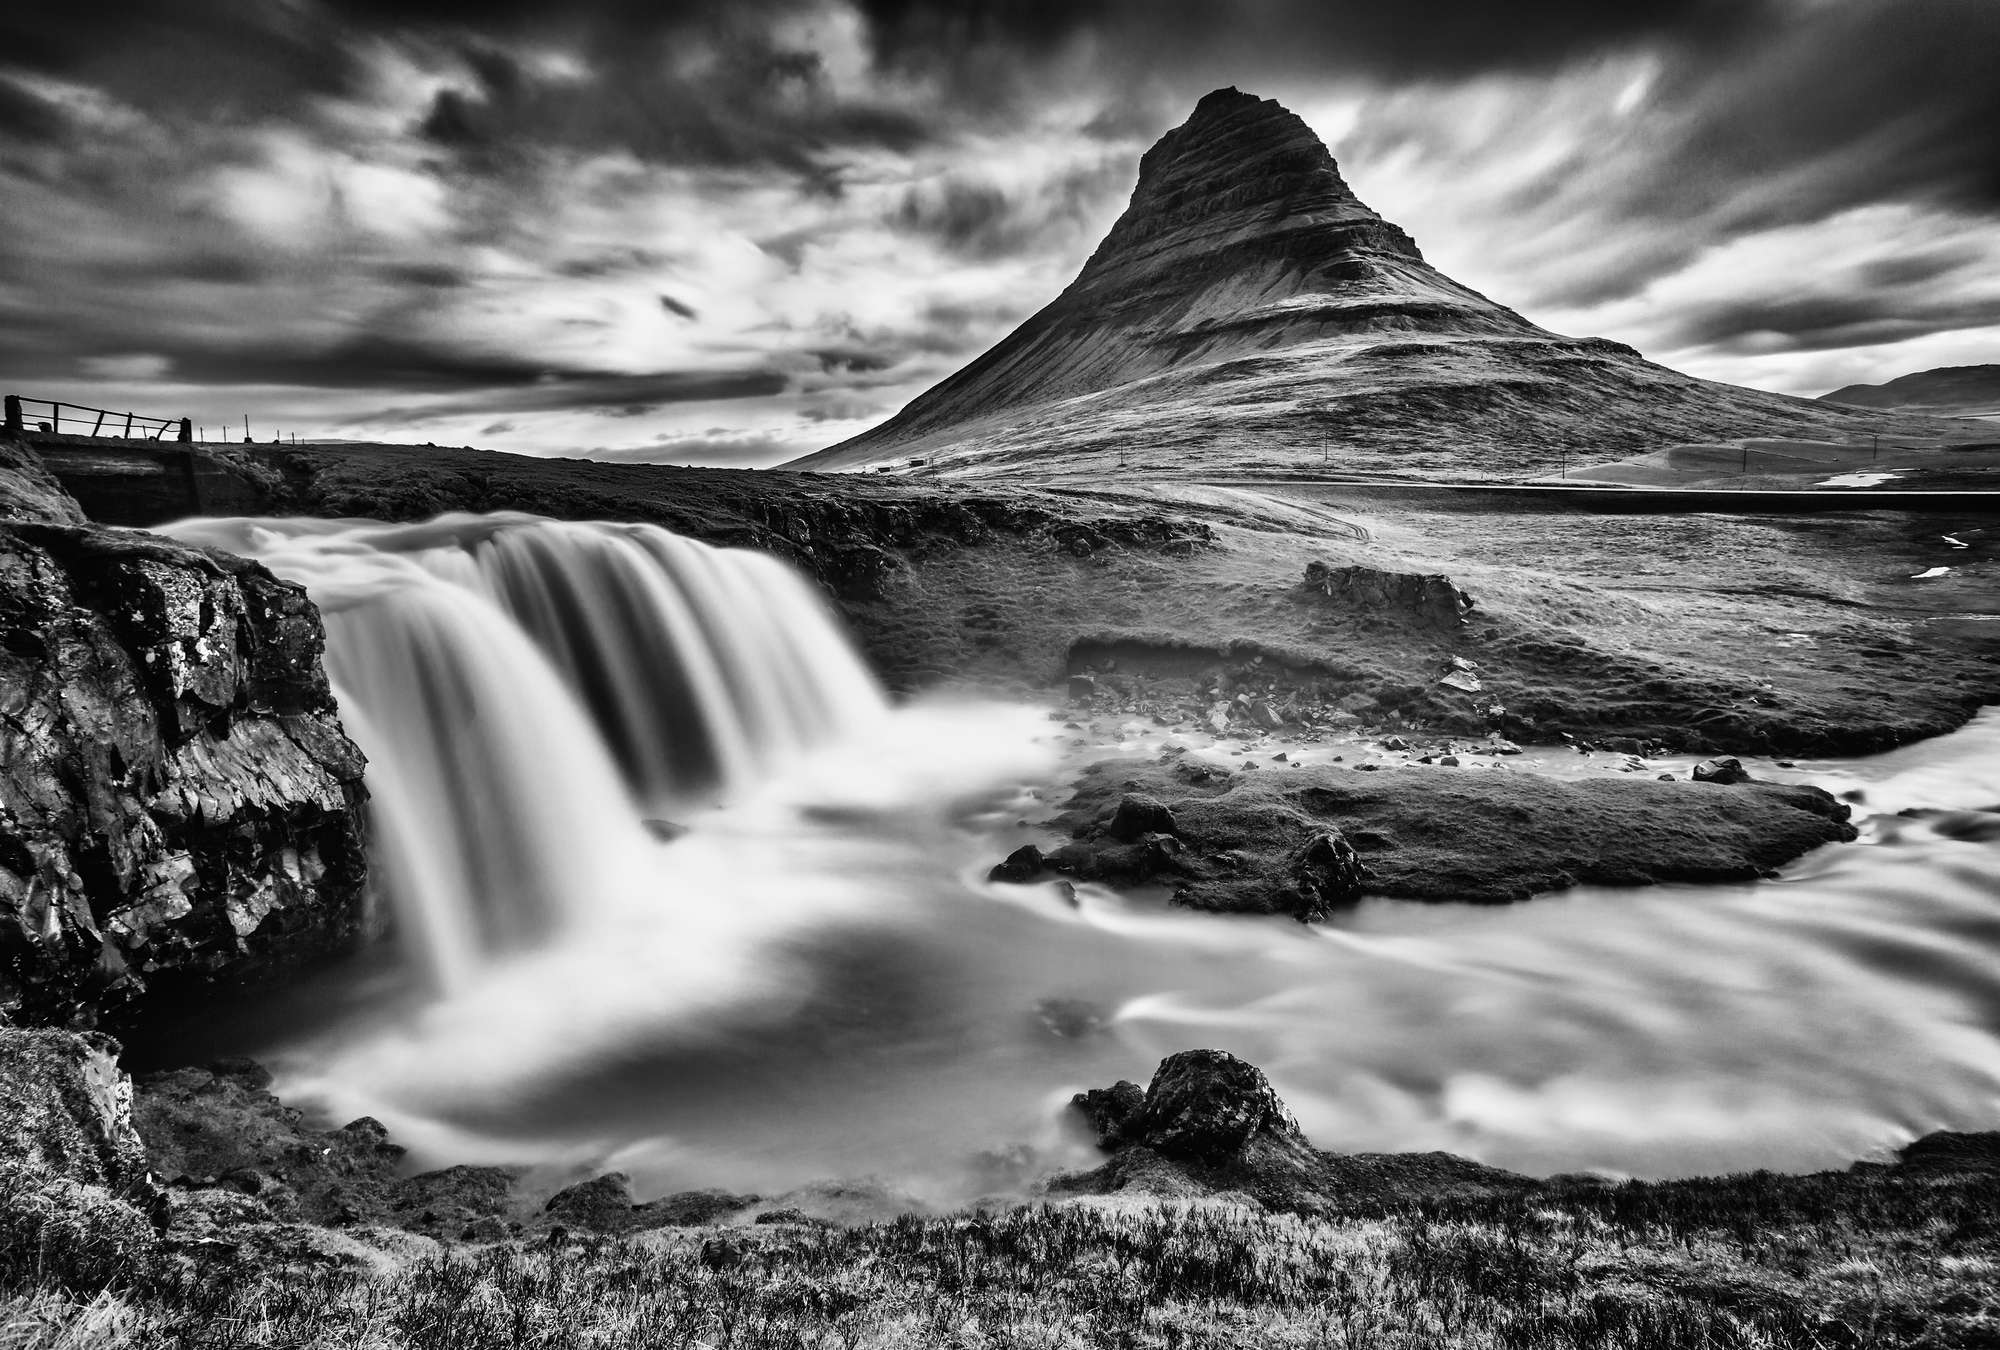             Photo wallpaper Krikjufellfoss landscape motif mountain and waterfalls - black and white
        